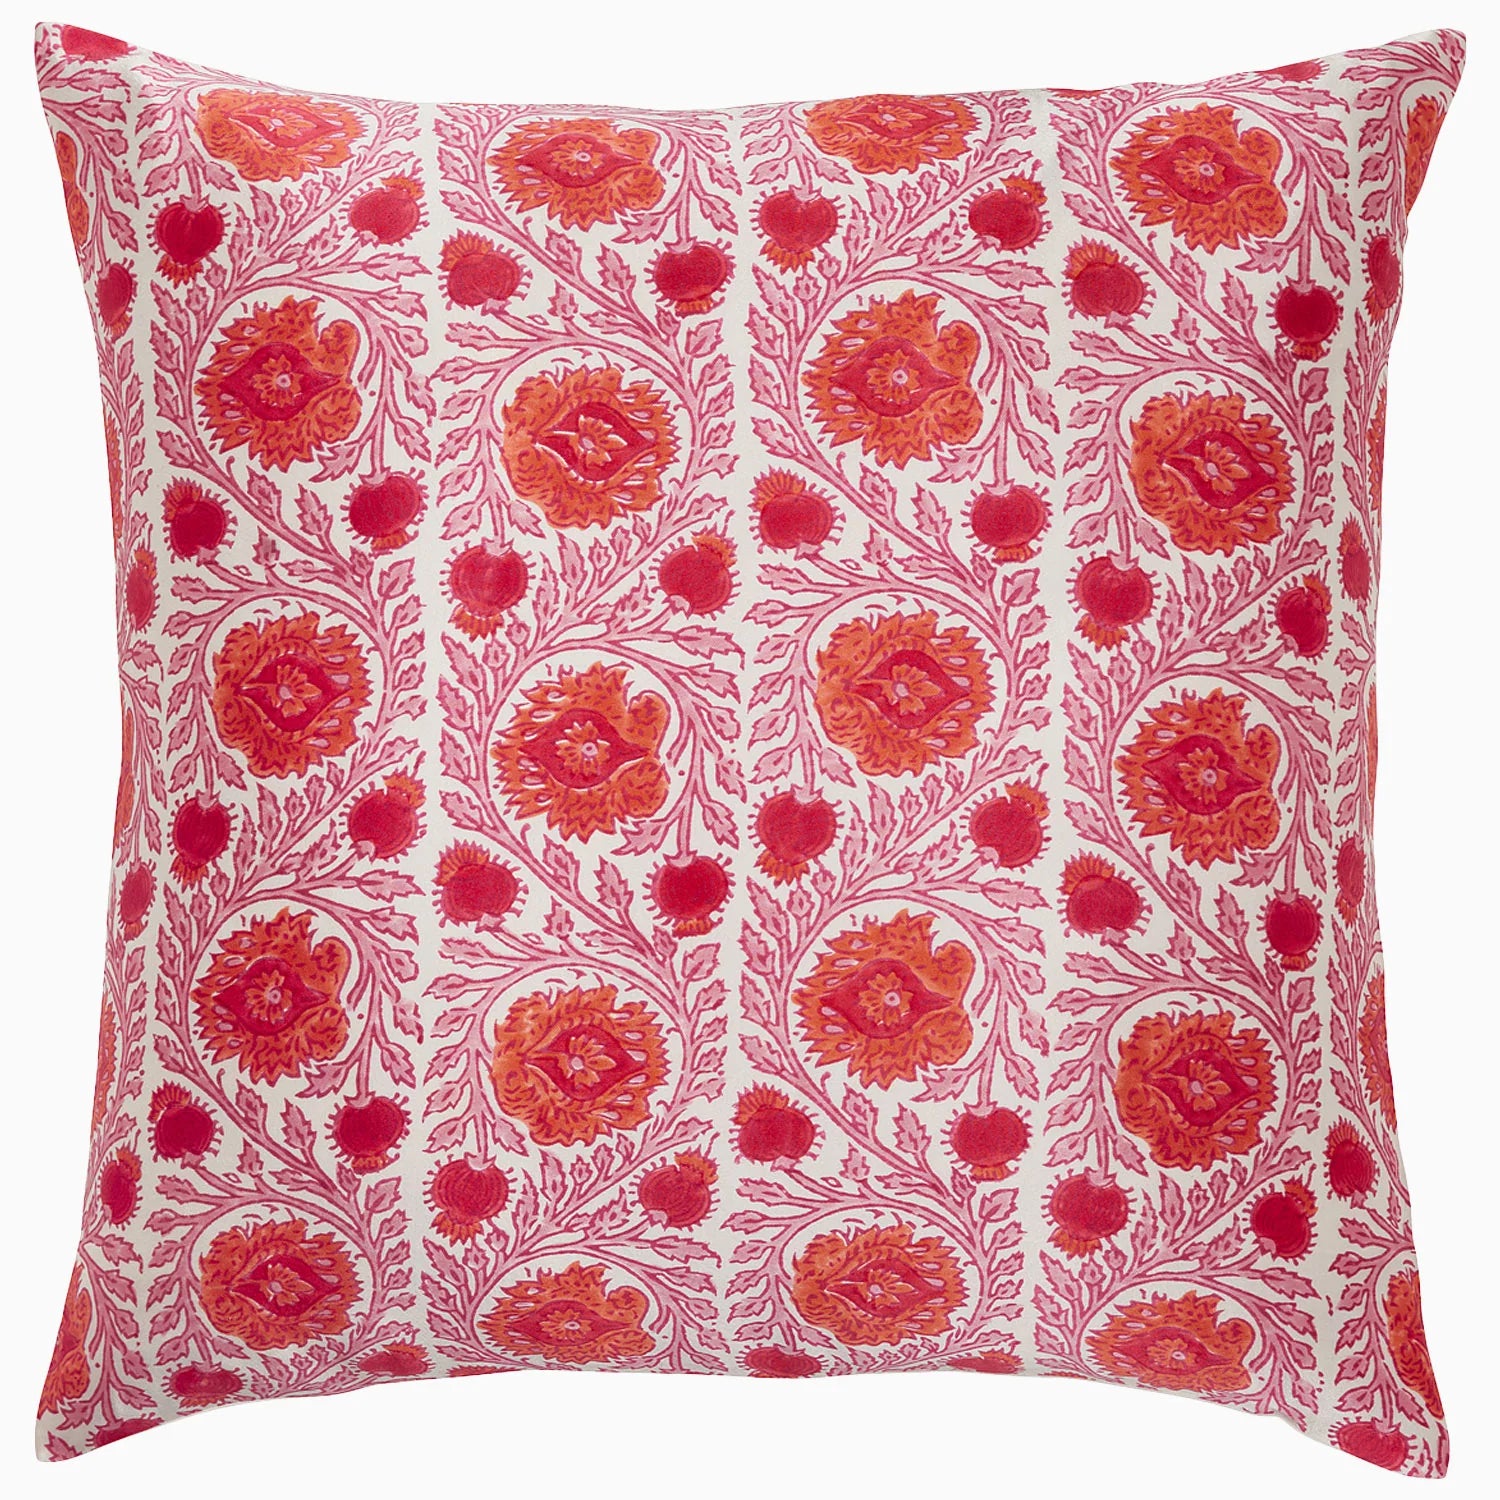 Iyla Berry Decorative Pillow